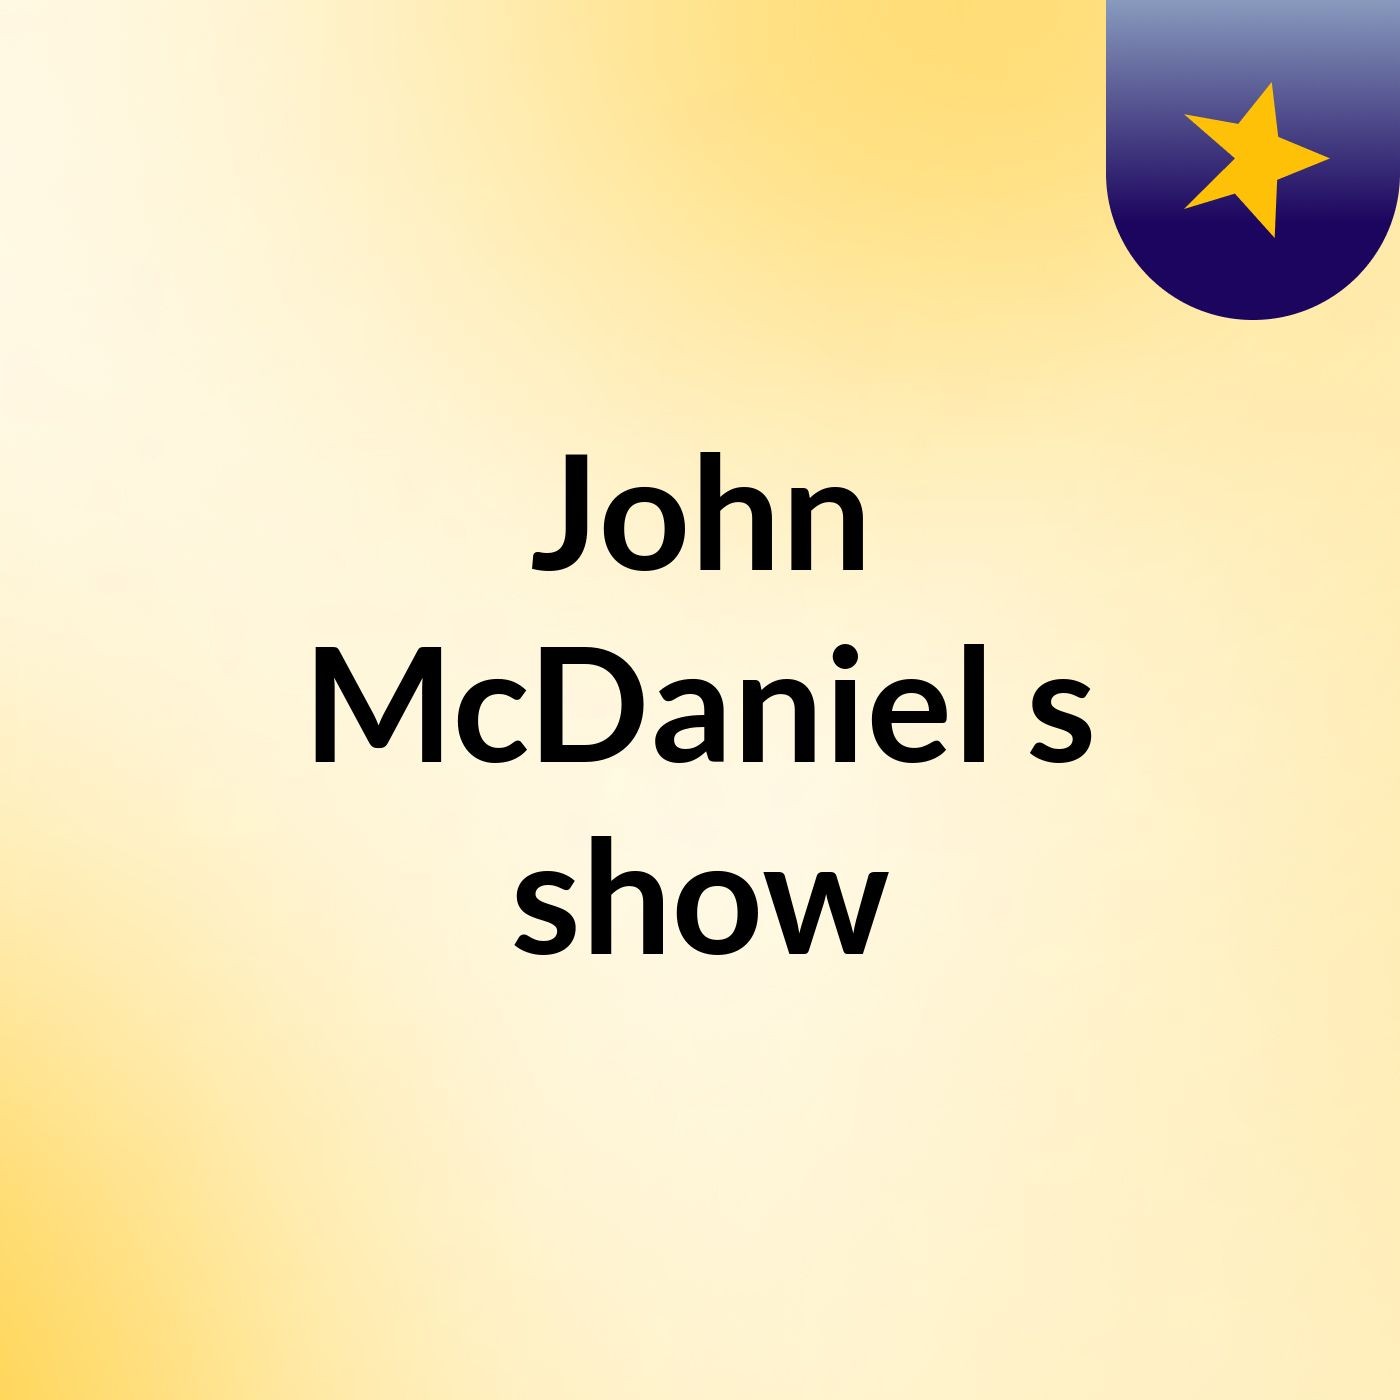 John McDaniel's show